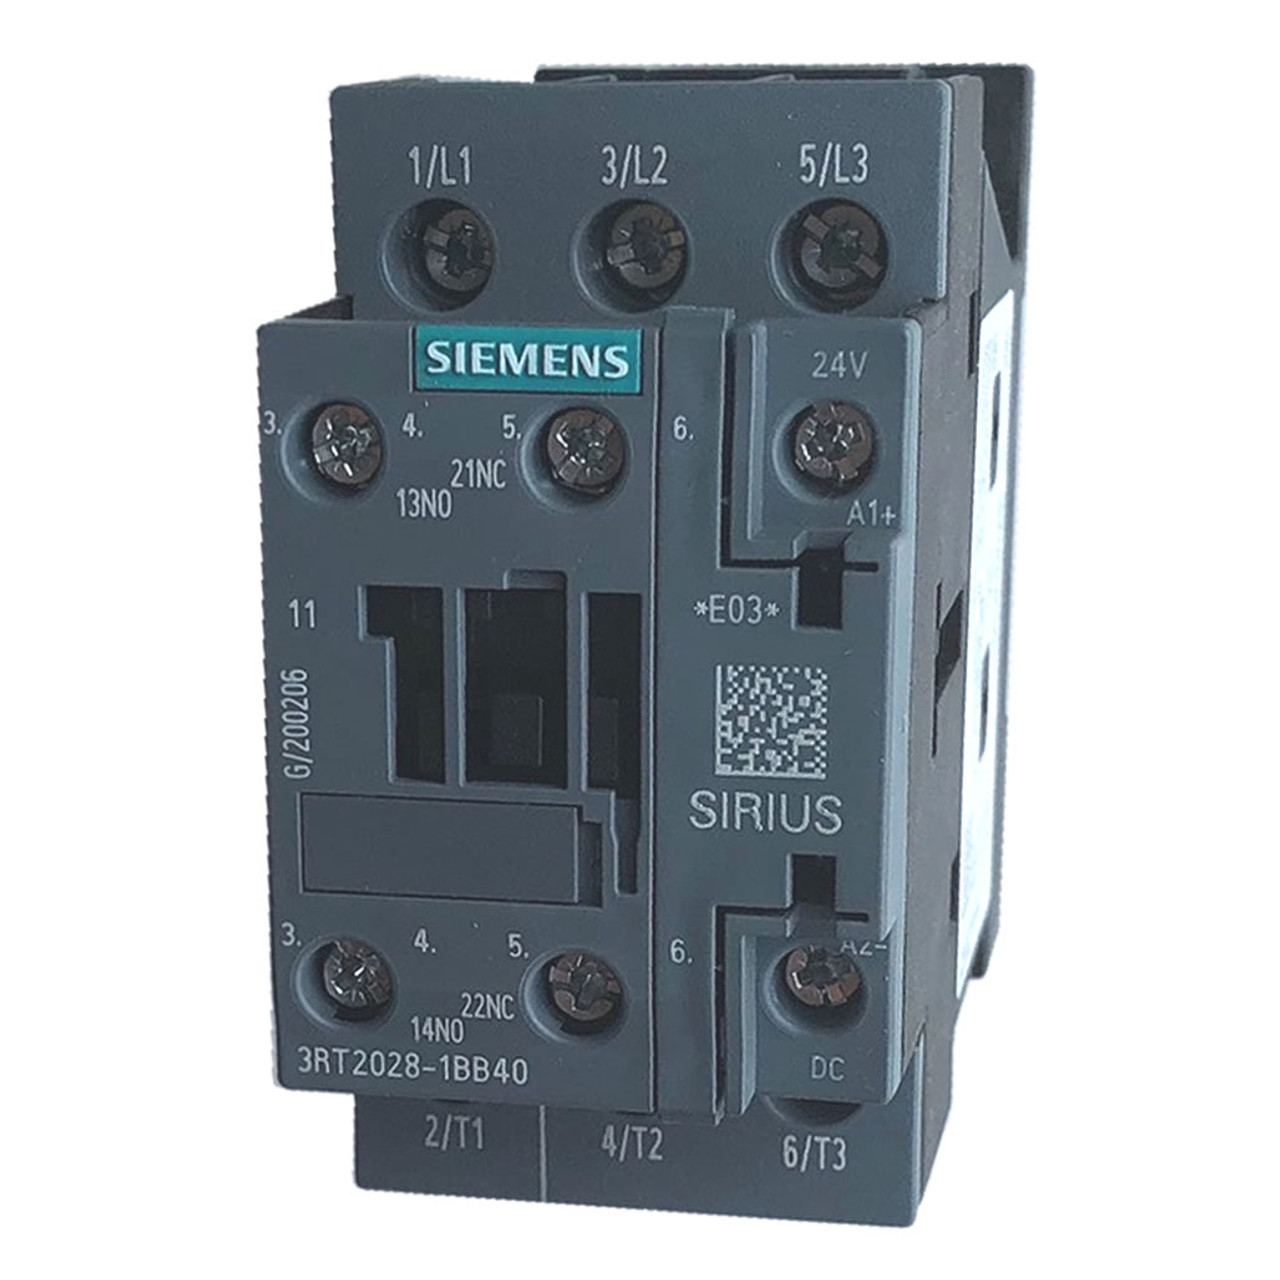 Siemens 3RT2028-1BG40 contactor